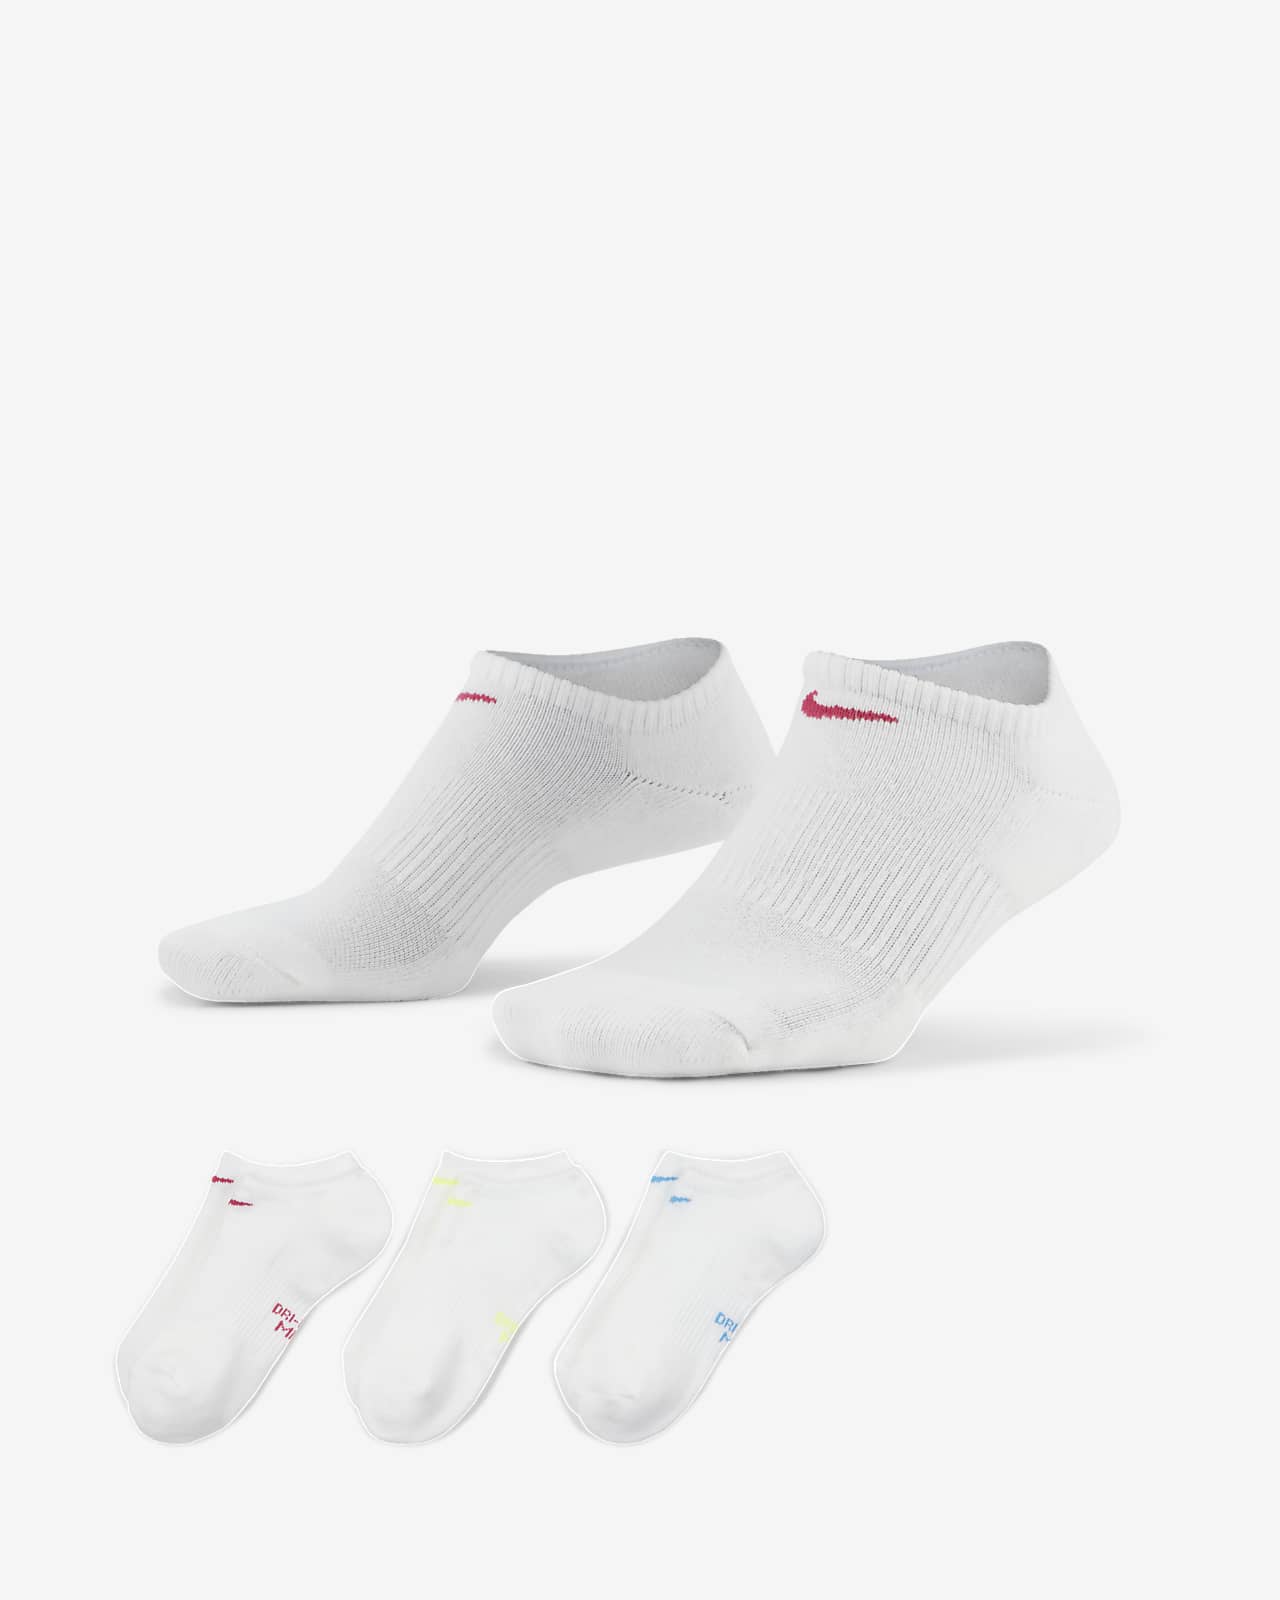 Nike Everyday Cushioned Women's Training No-Show Socks (3 Pairs)